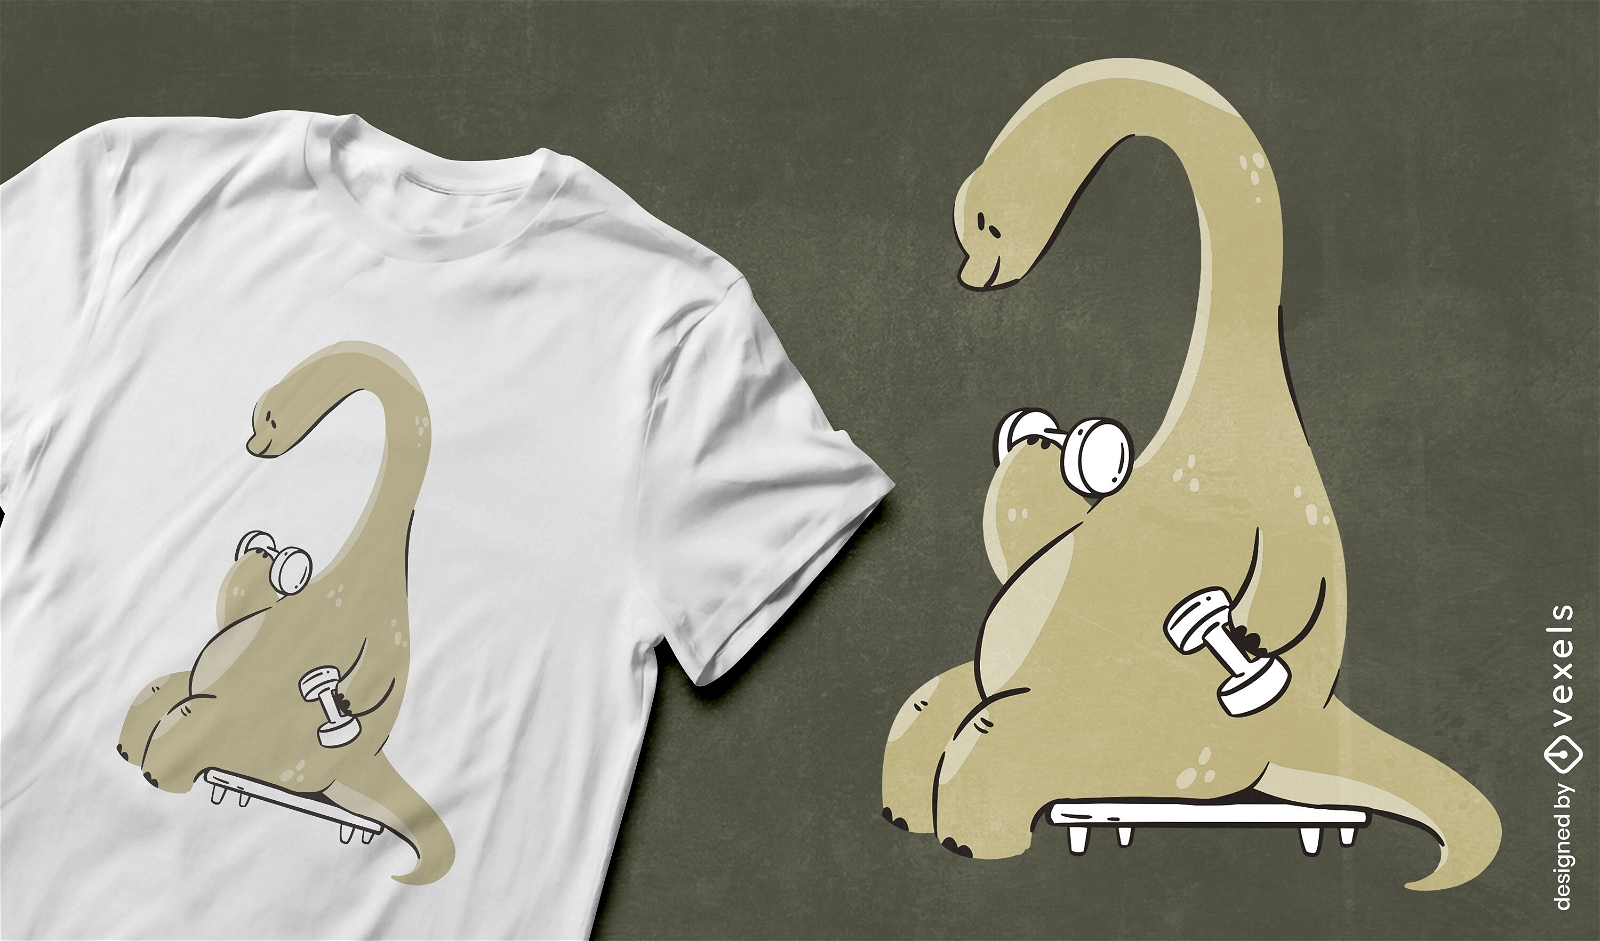 Dise?o de camiseta de dinosaurio de gimnasio.